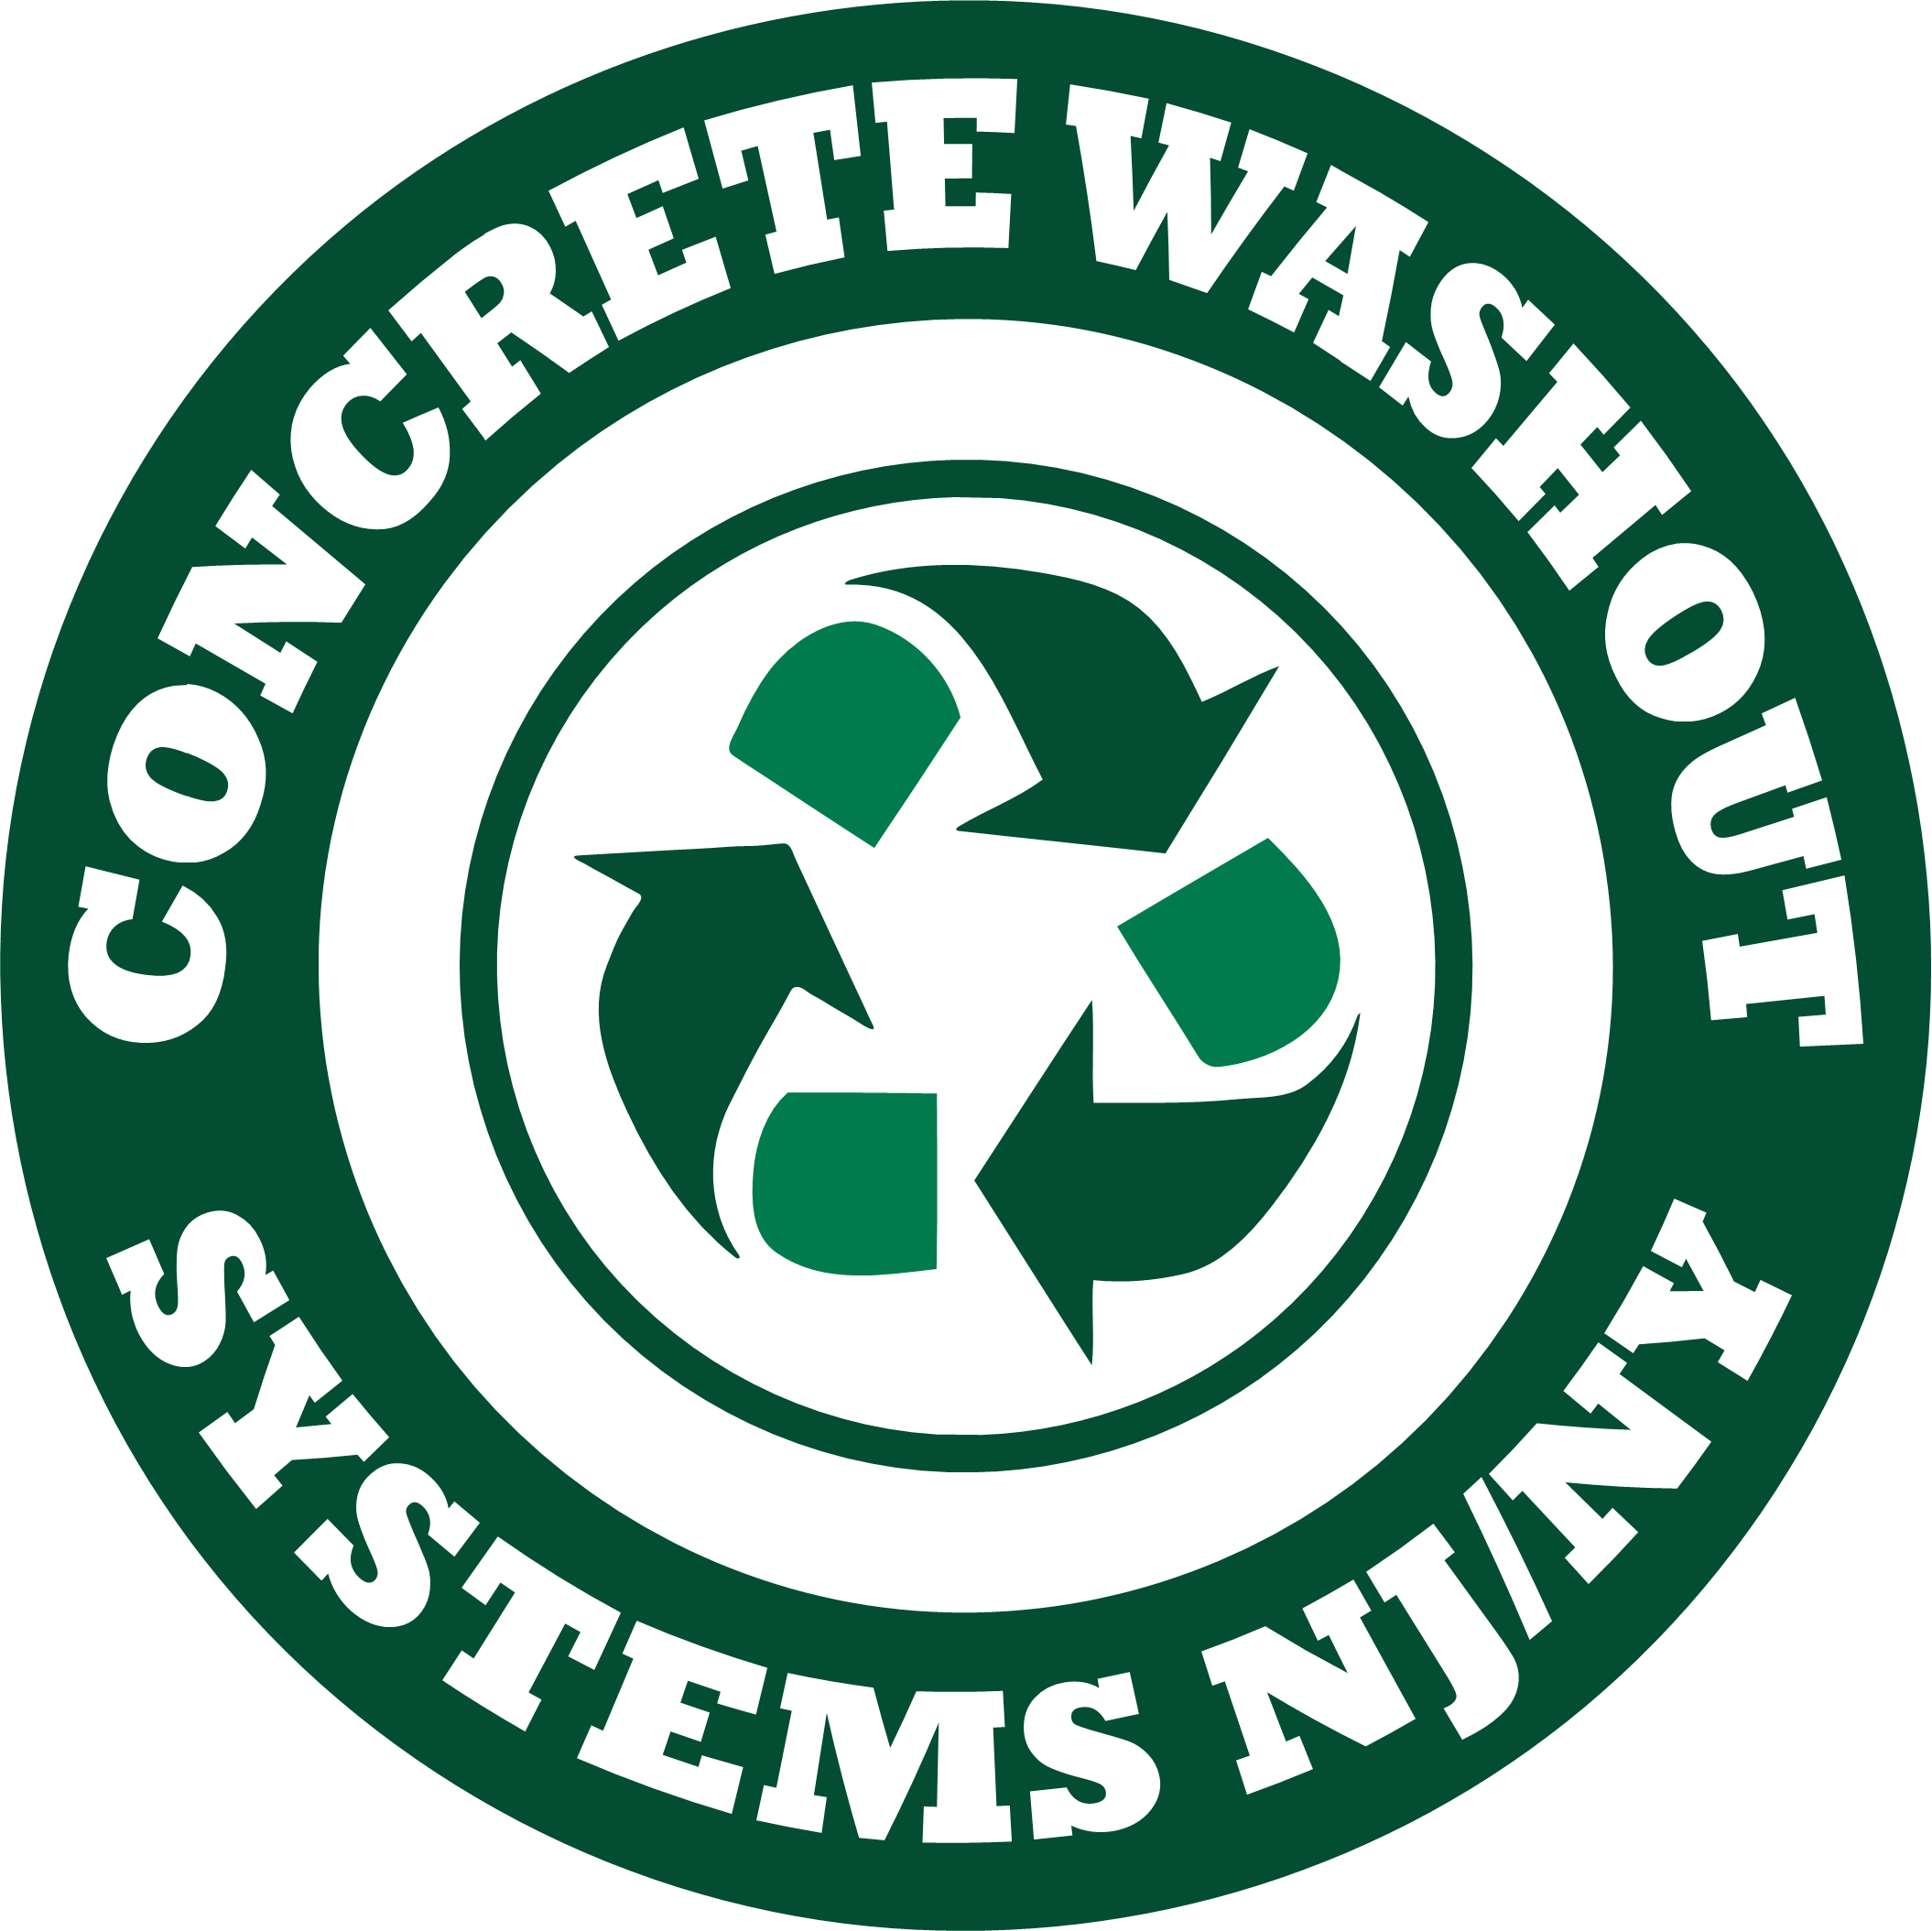 Concrete Washout Systems